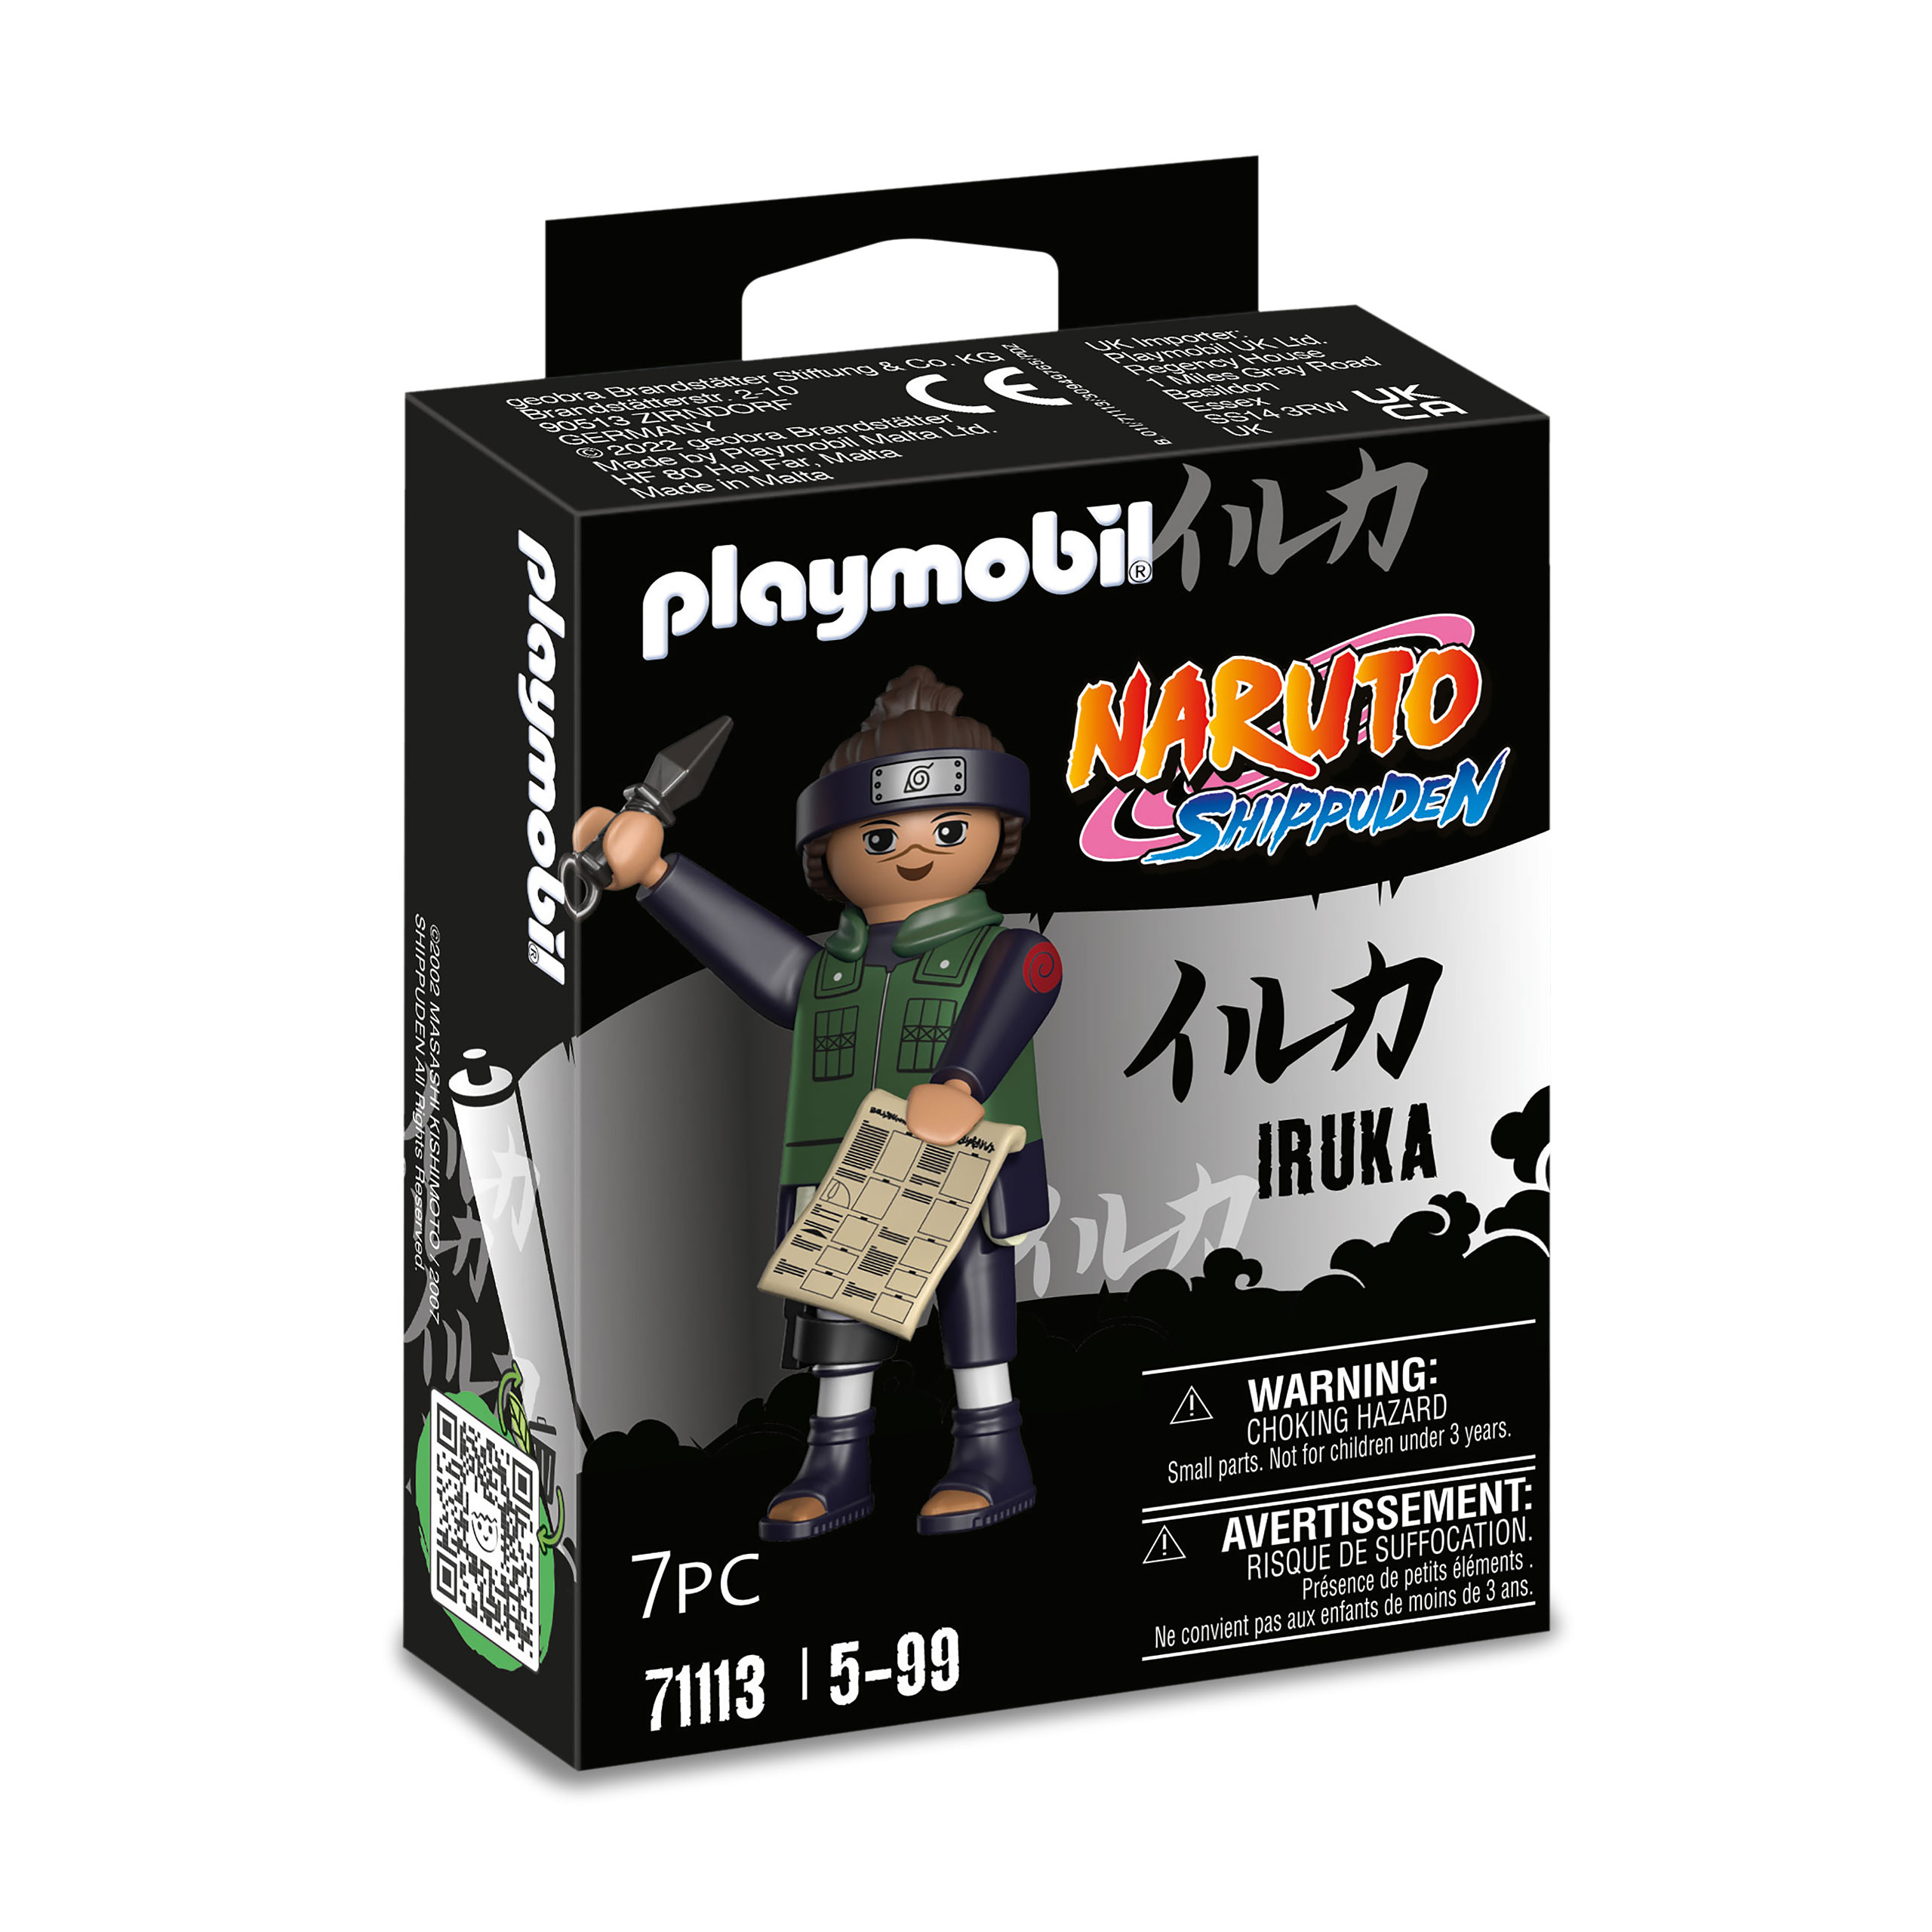 Naruto - lruka Playmobil Figur